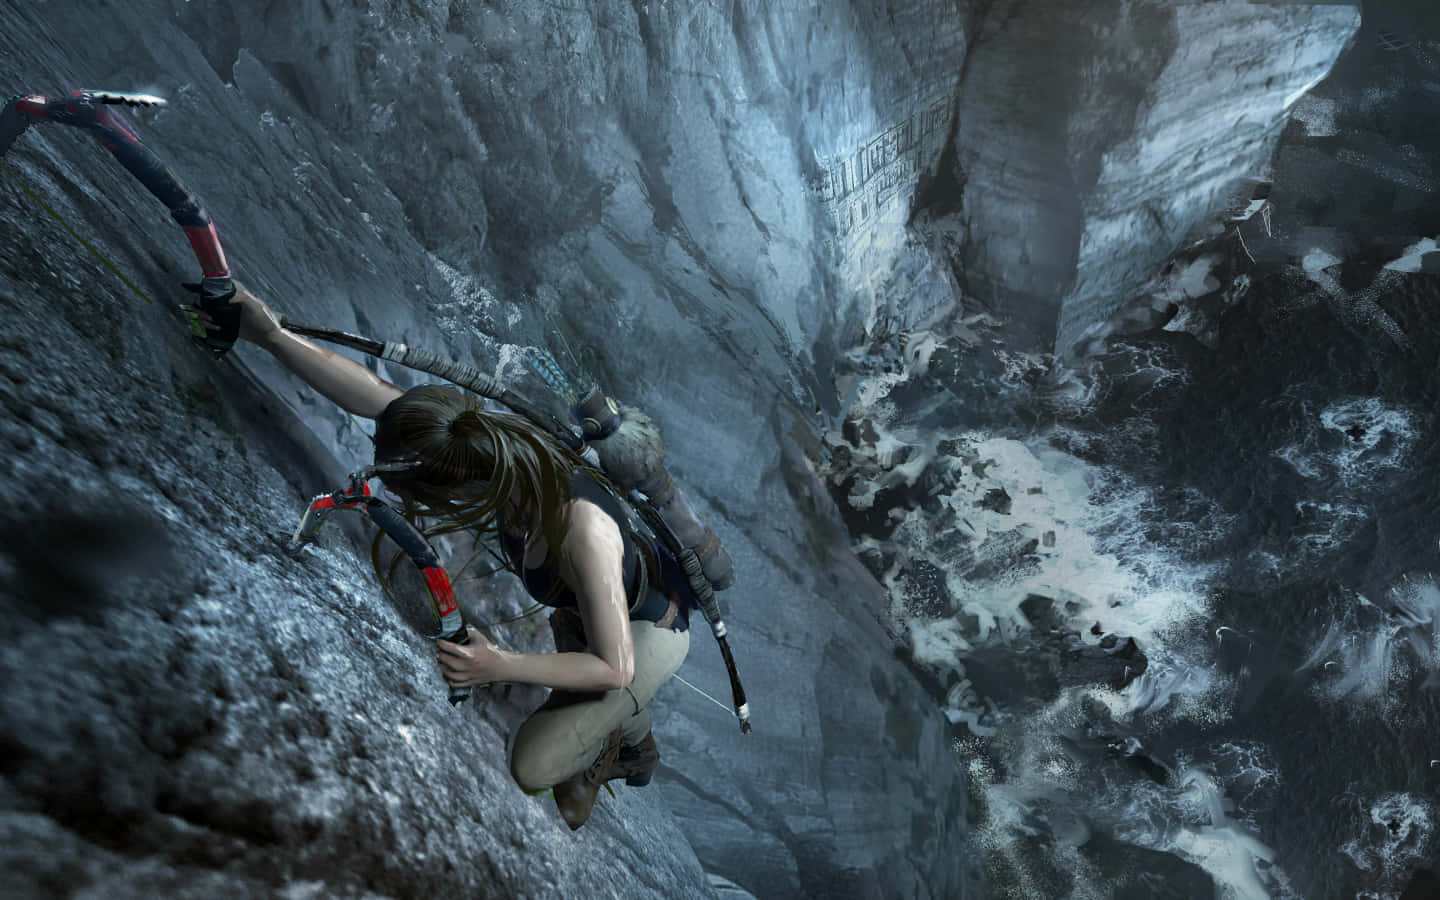 Immergitiin Un'avventura Epica Con Shadow Of The Tomb Raider.